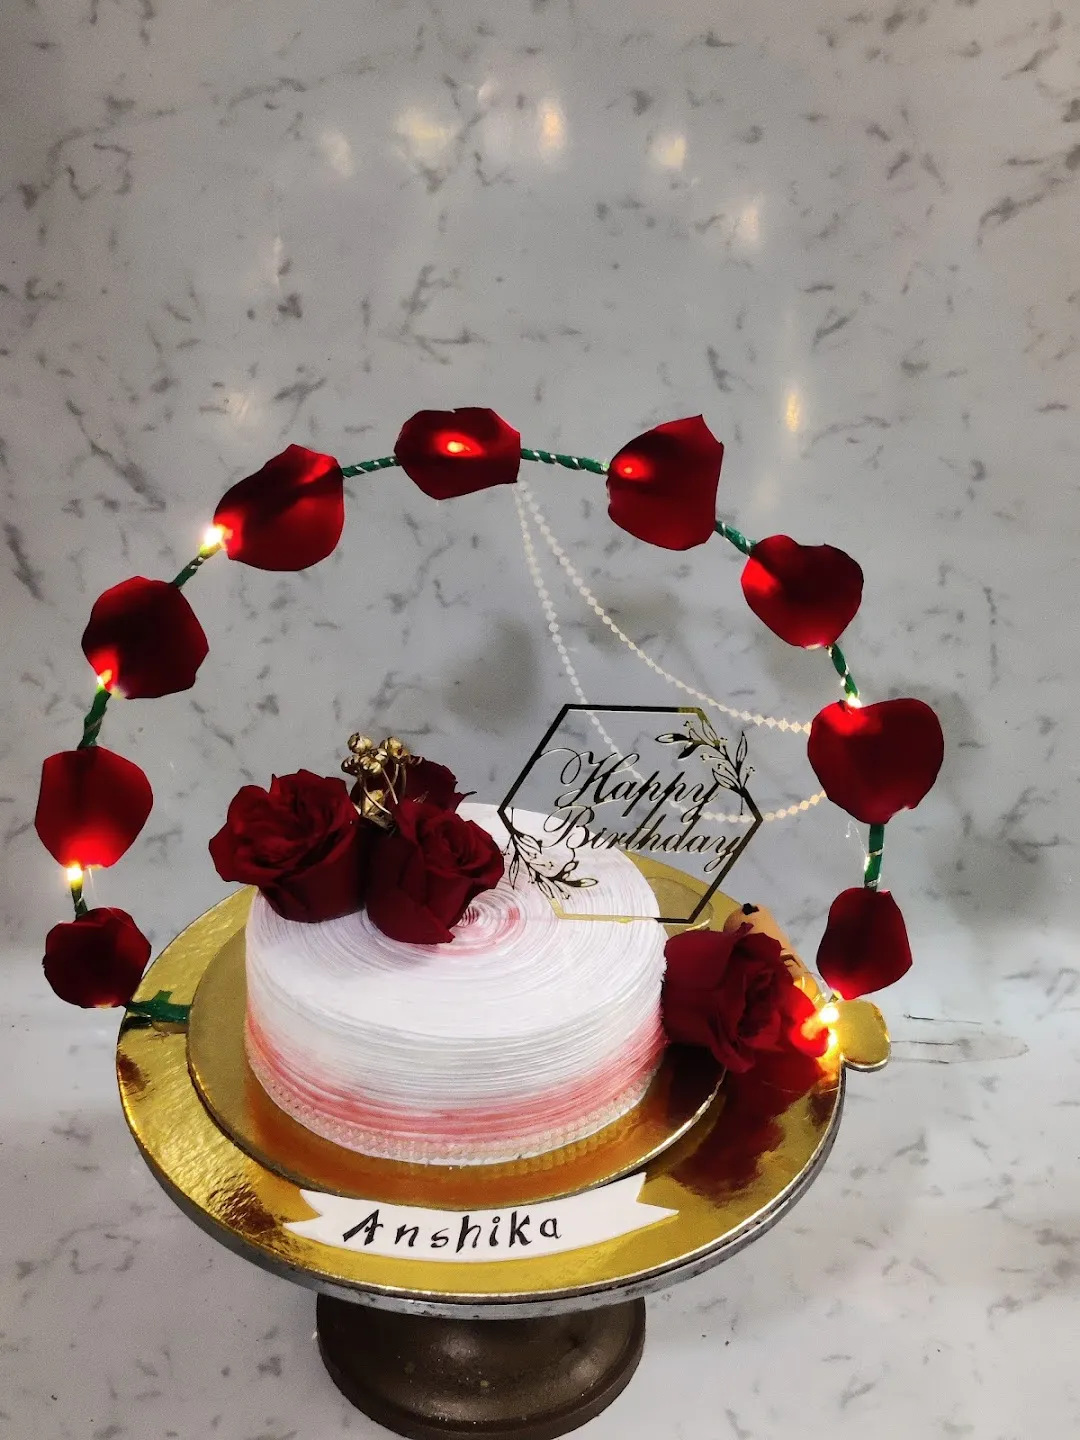 Aggregate more than 124 anshika birthday cake super hot - in.eteachers